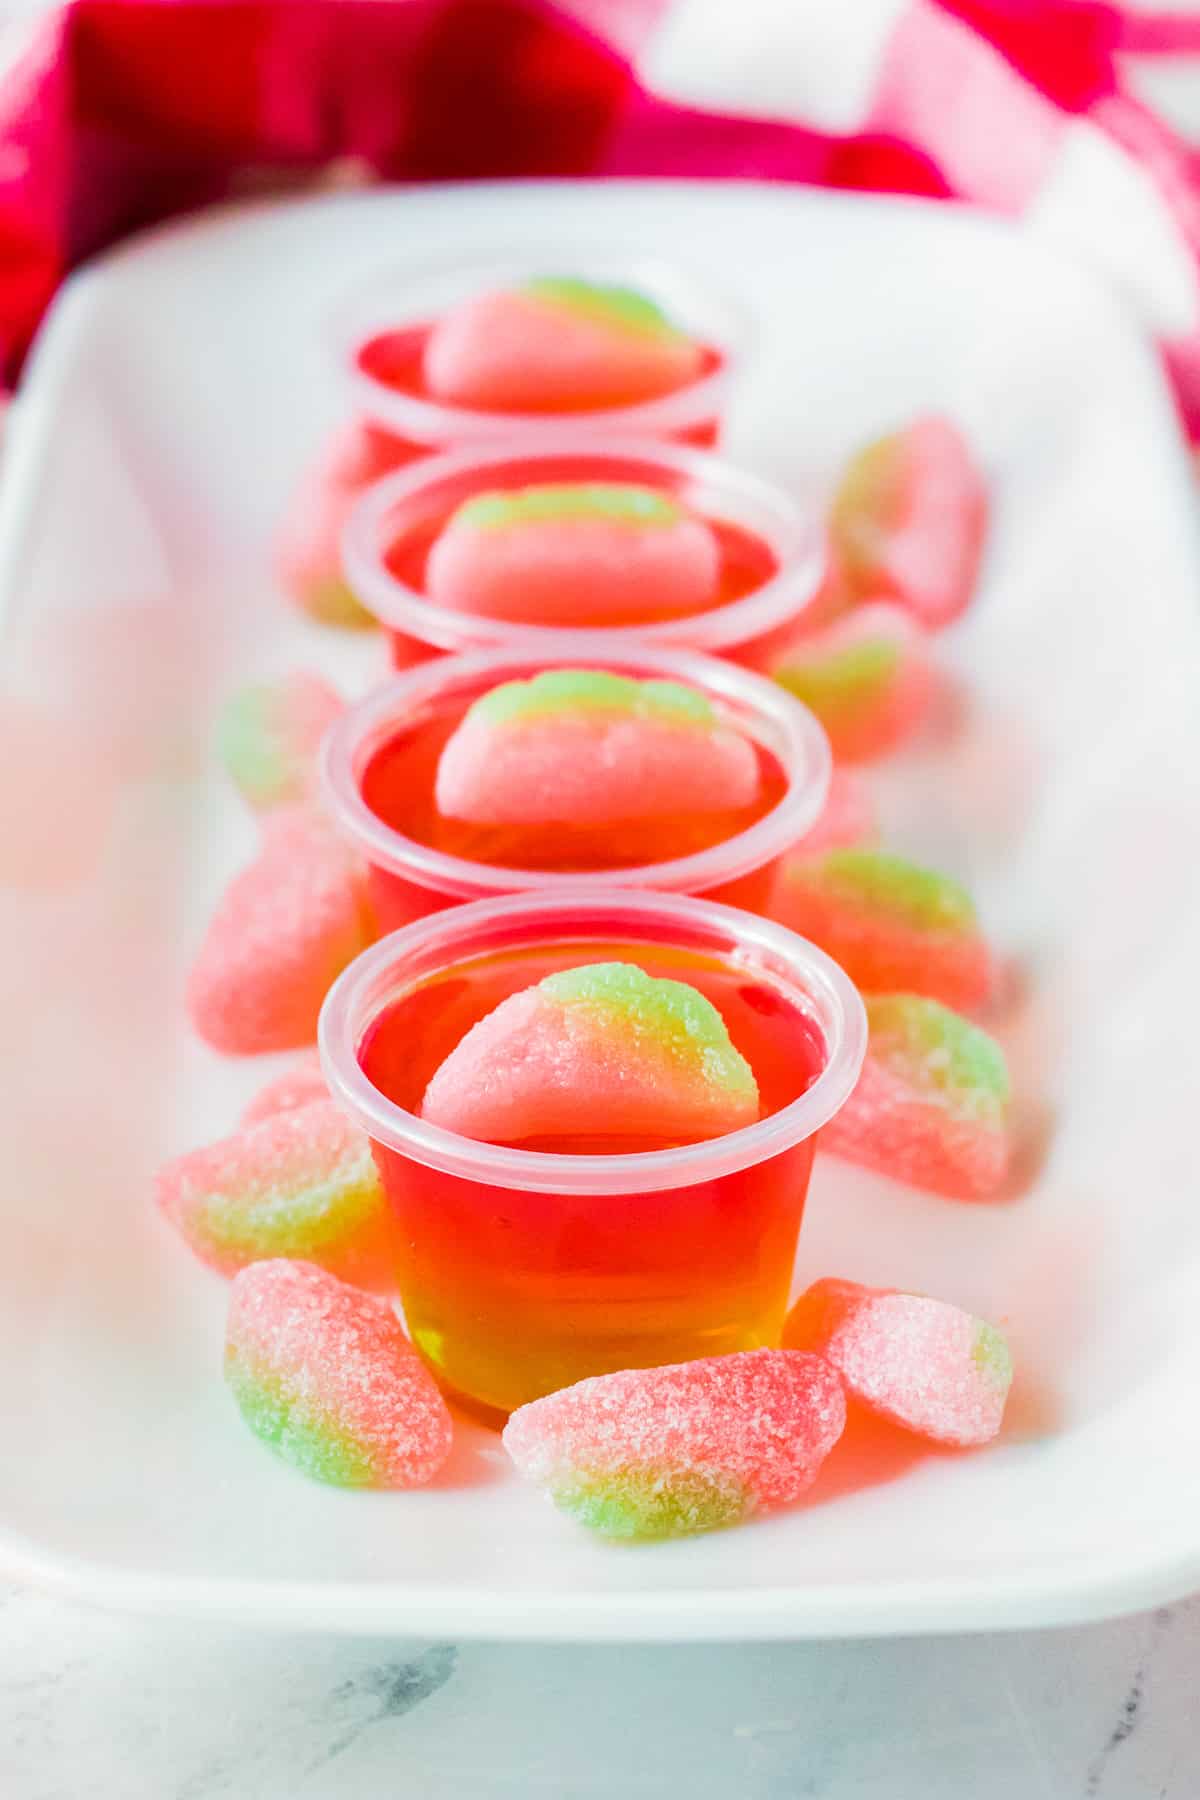 Watermelon vodka jello shots on white serving tray with watermelon sour candies around them.